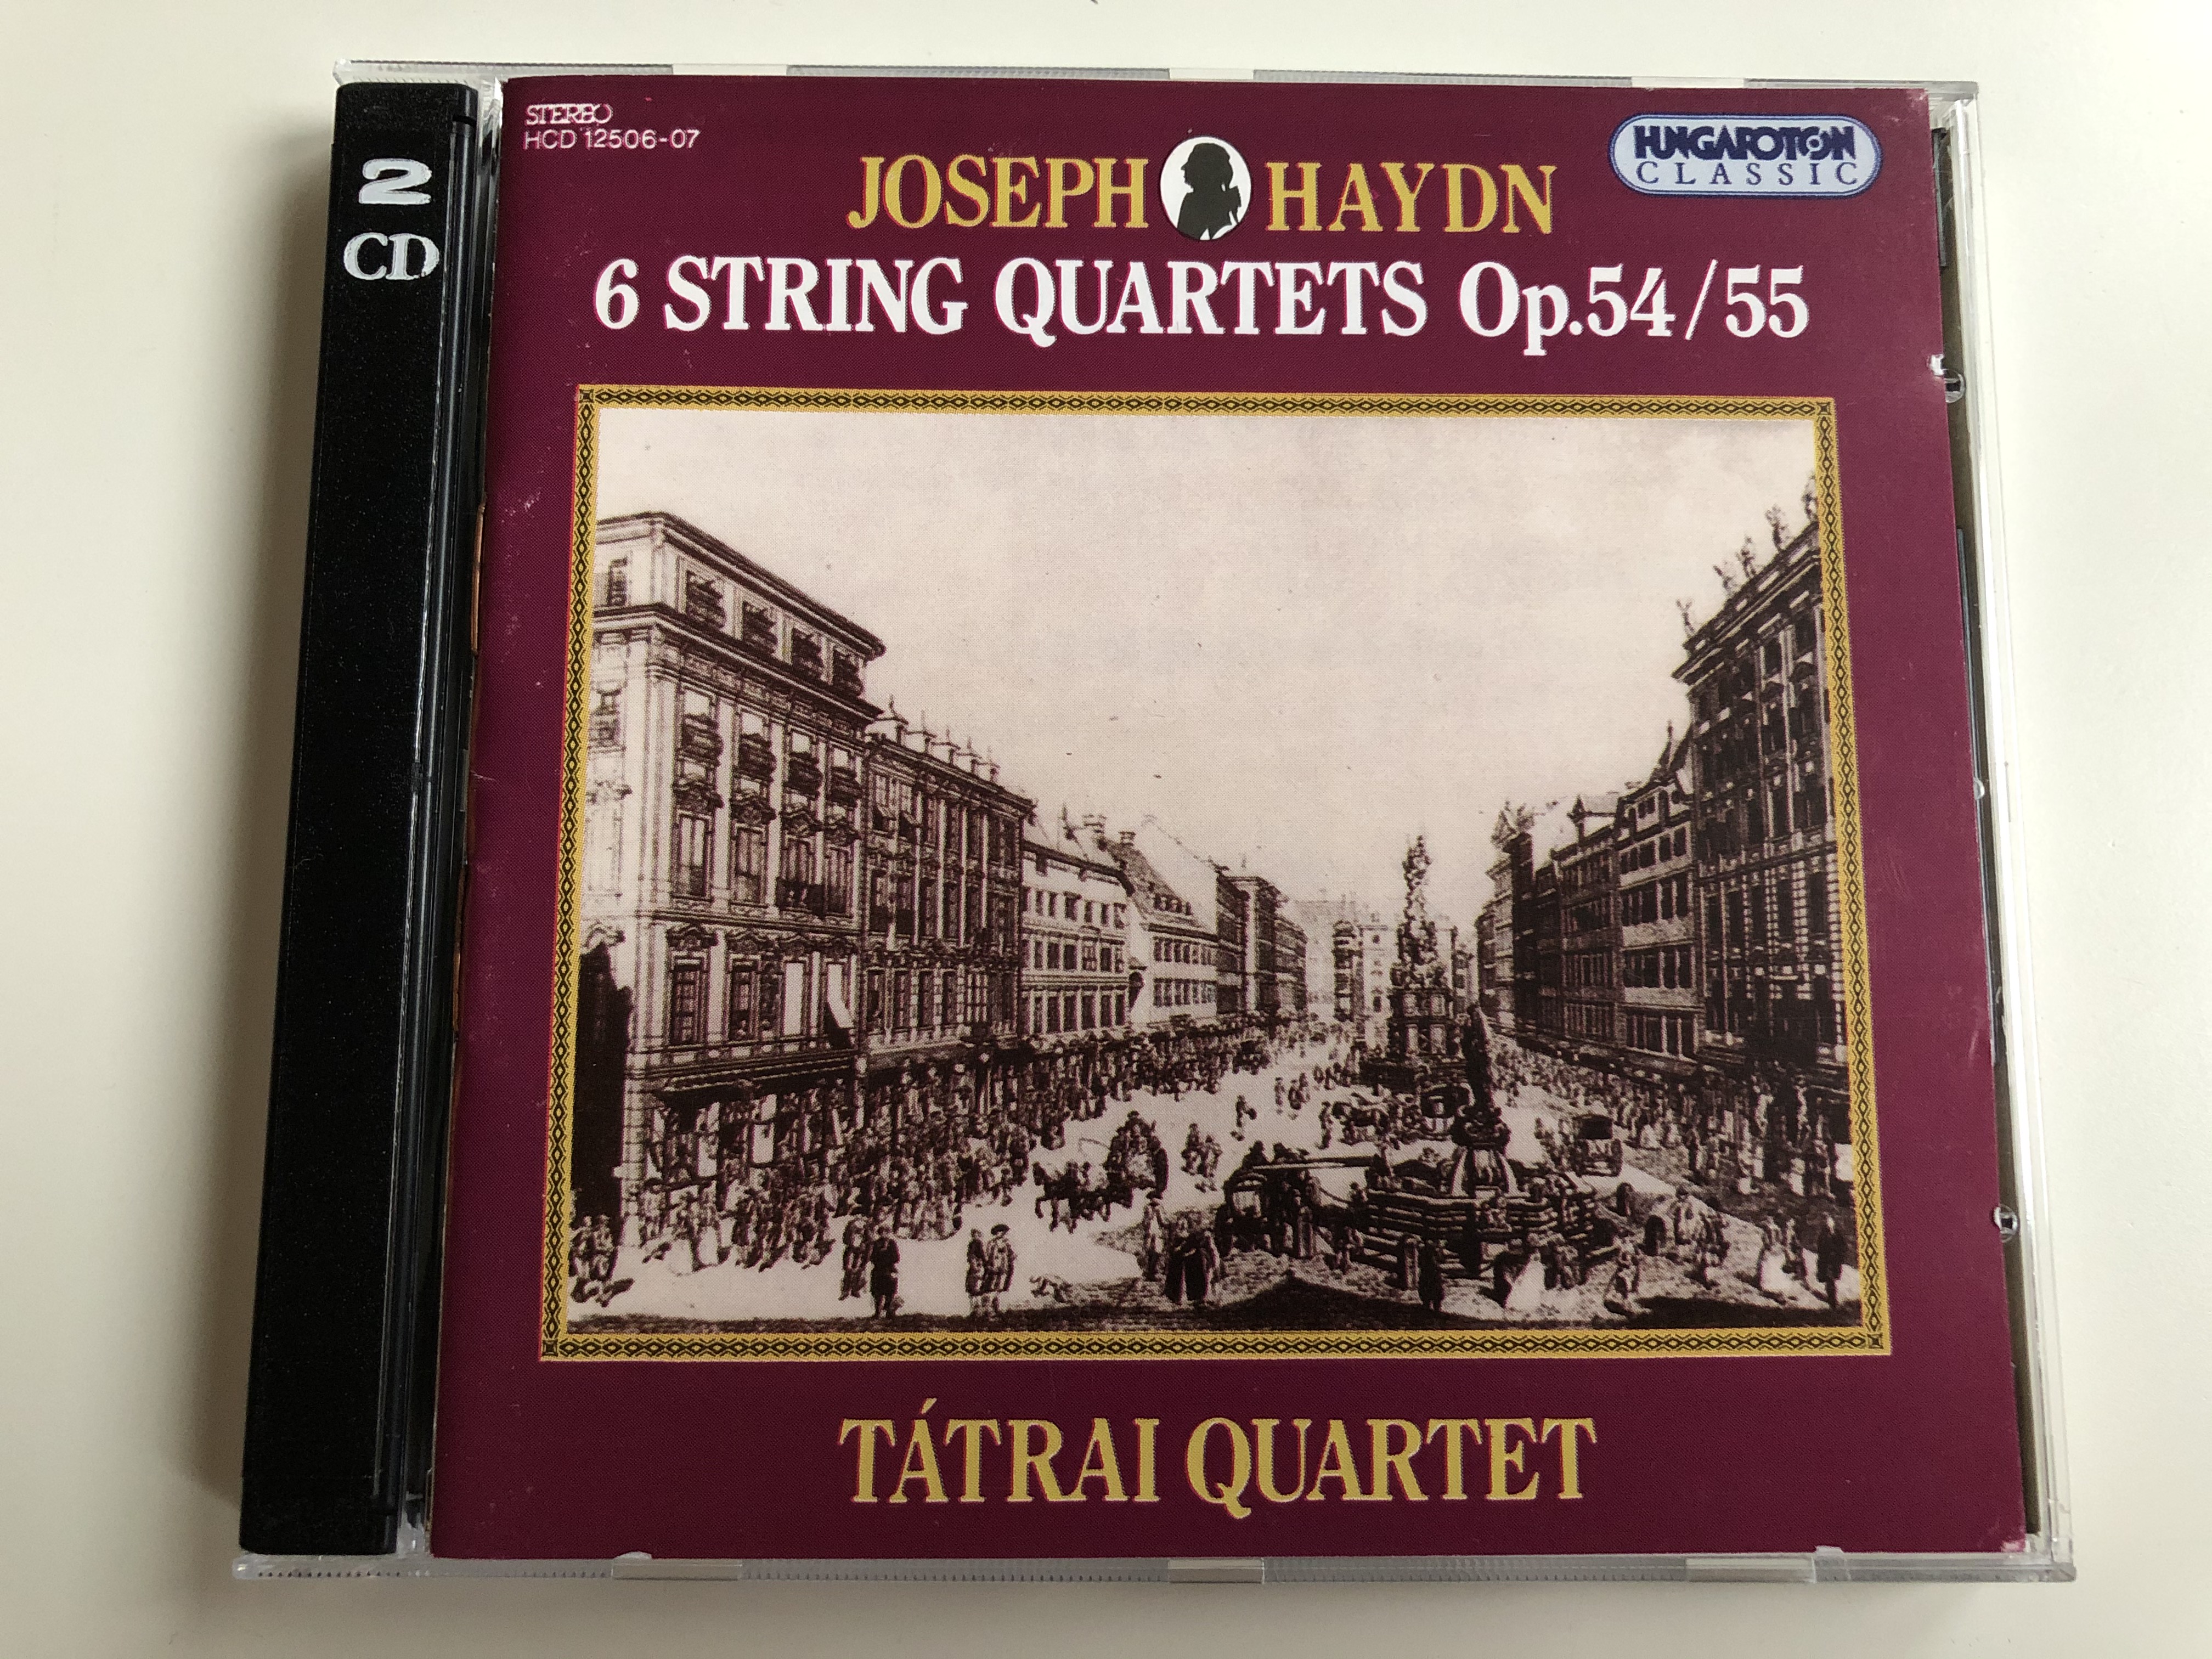 joseph-haydn-6-string-quartets-opp.-5455-t-trai-quartet-hungaroton-classic-2x-audio-cd-1994-stereo-hcd-12506-07-1-.jpg